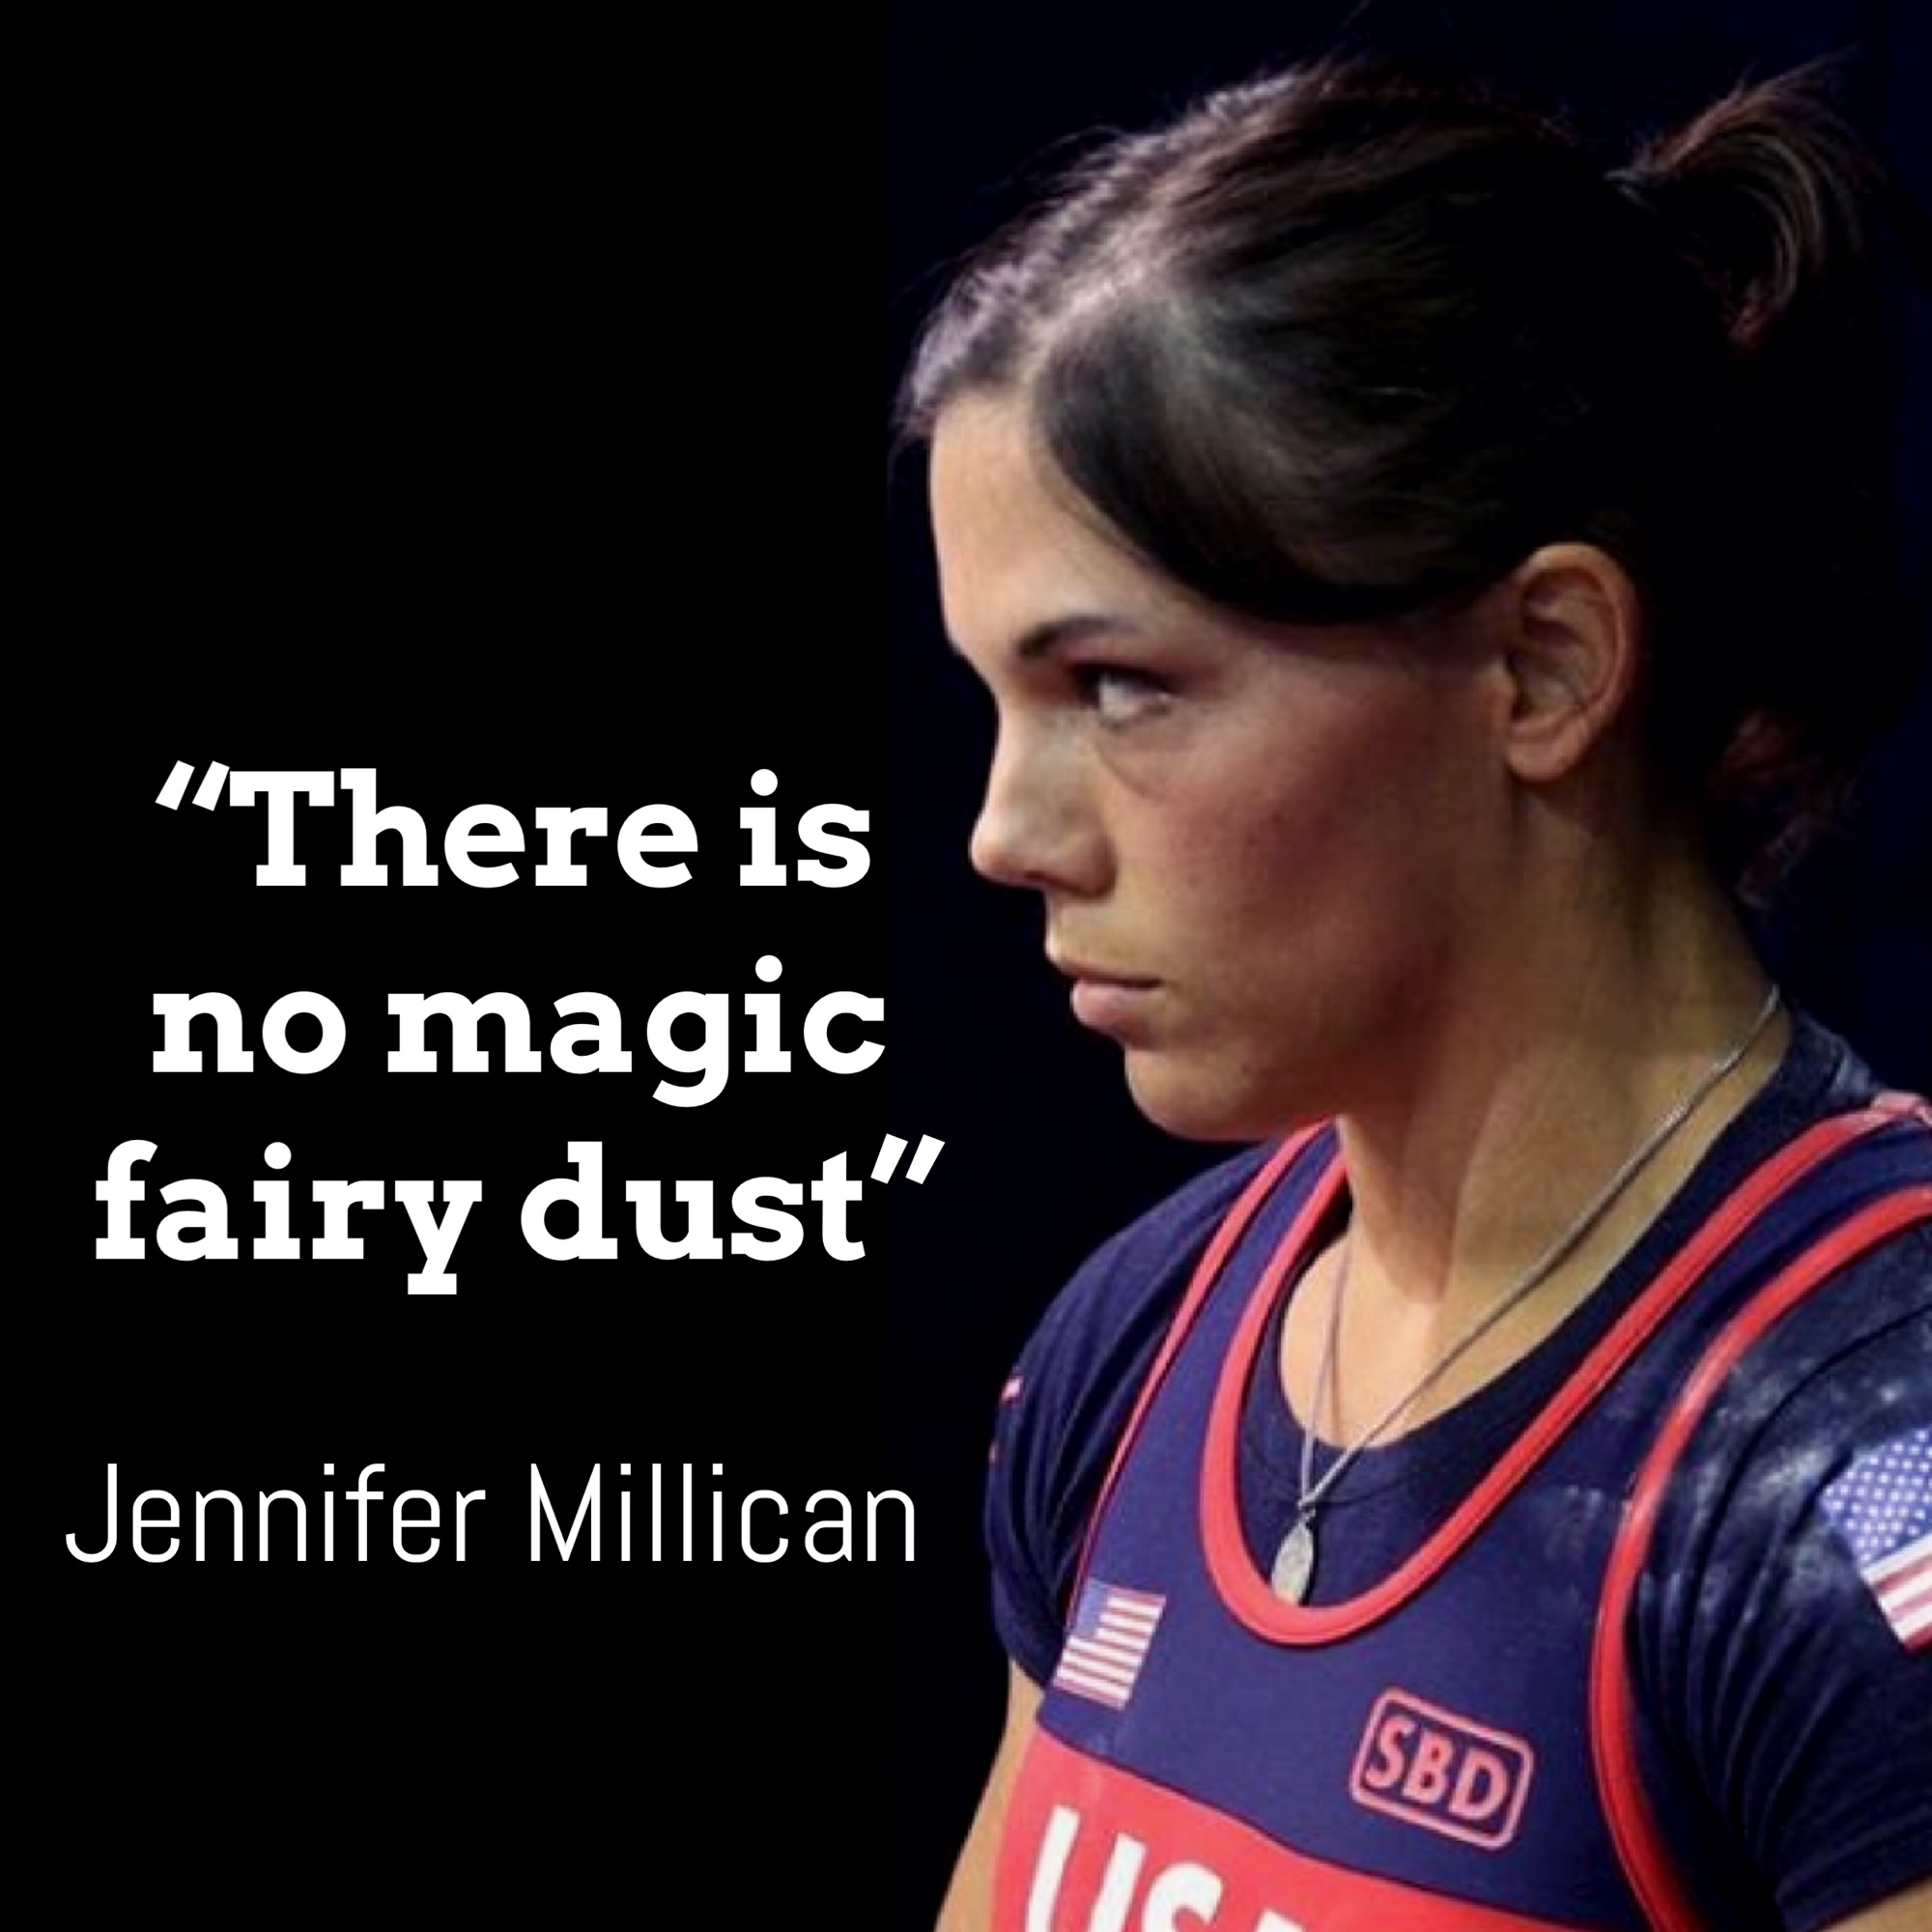 Jennifer Millican | “There is no magic fairy dust”